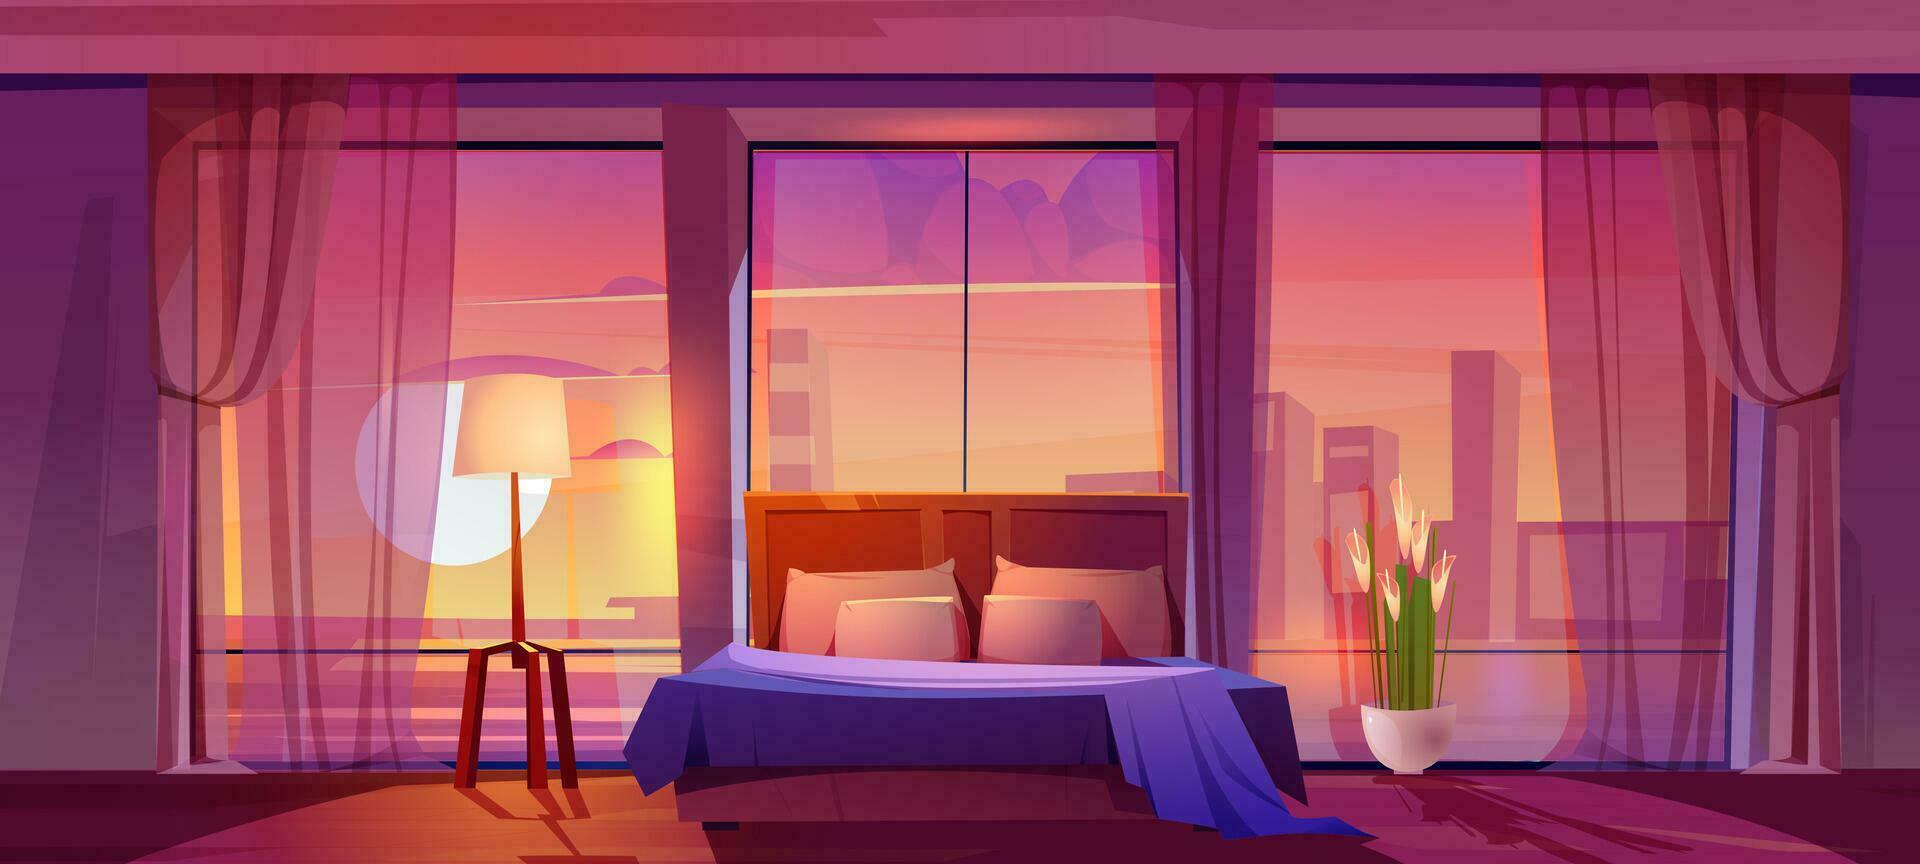 slaapkamer interieur kamer met zonsondergang stadsgezicht visie vector